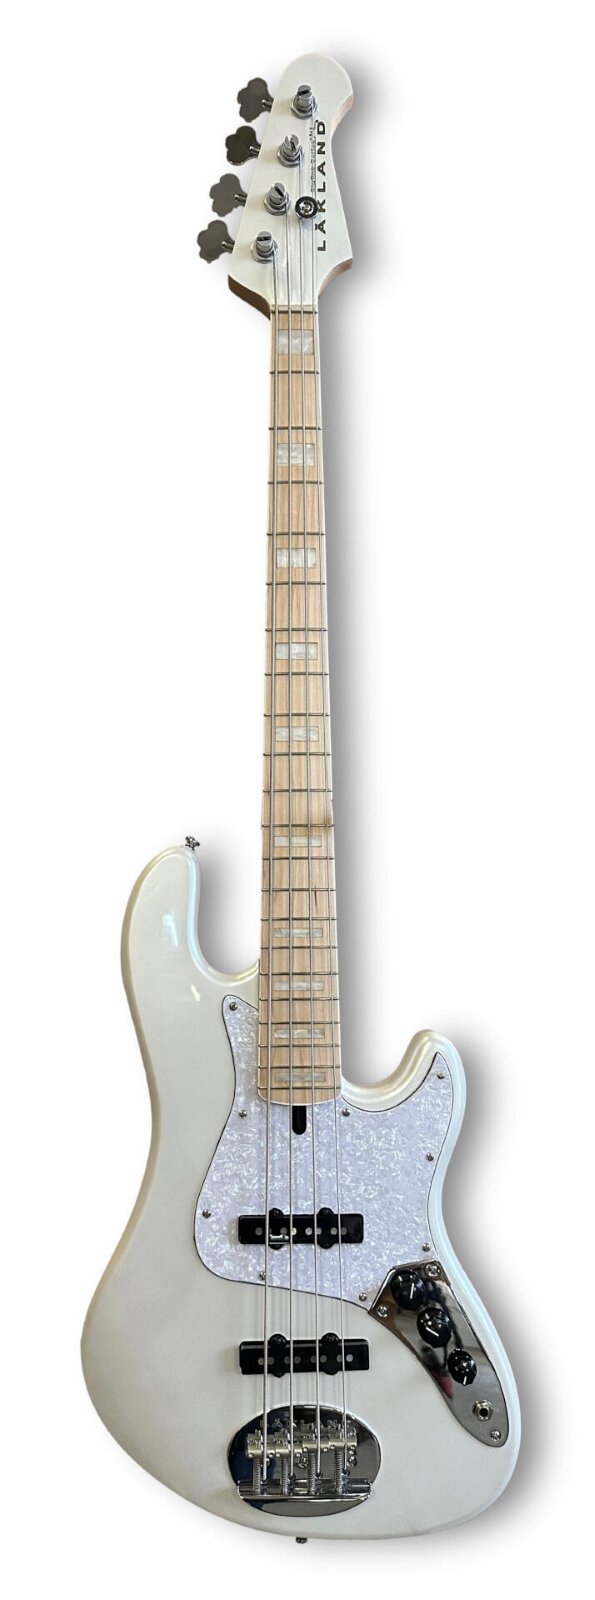 LAKLAND Skyline Darryl Jones Signature Bass, 4-String - White Pearl Gloss : photo 1